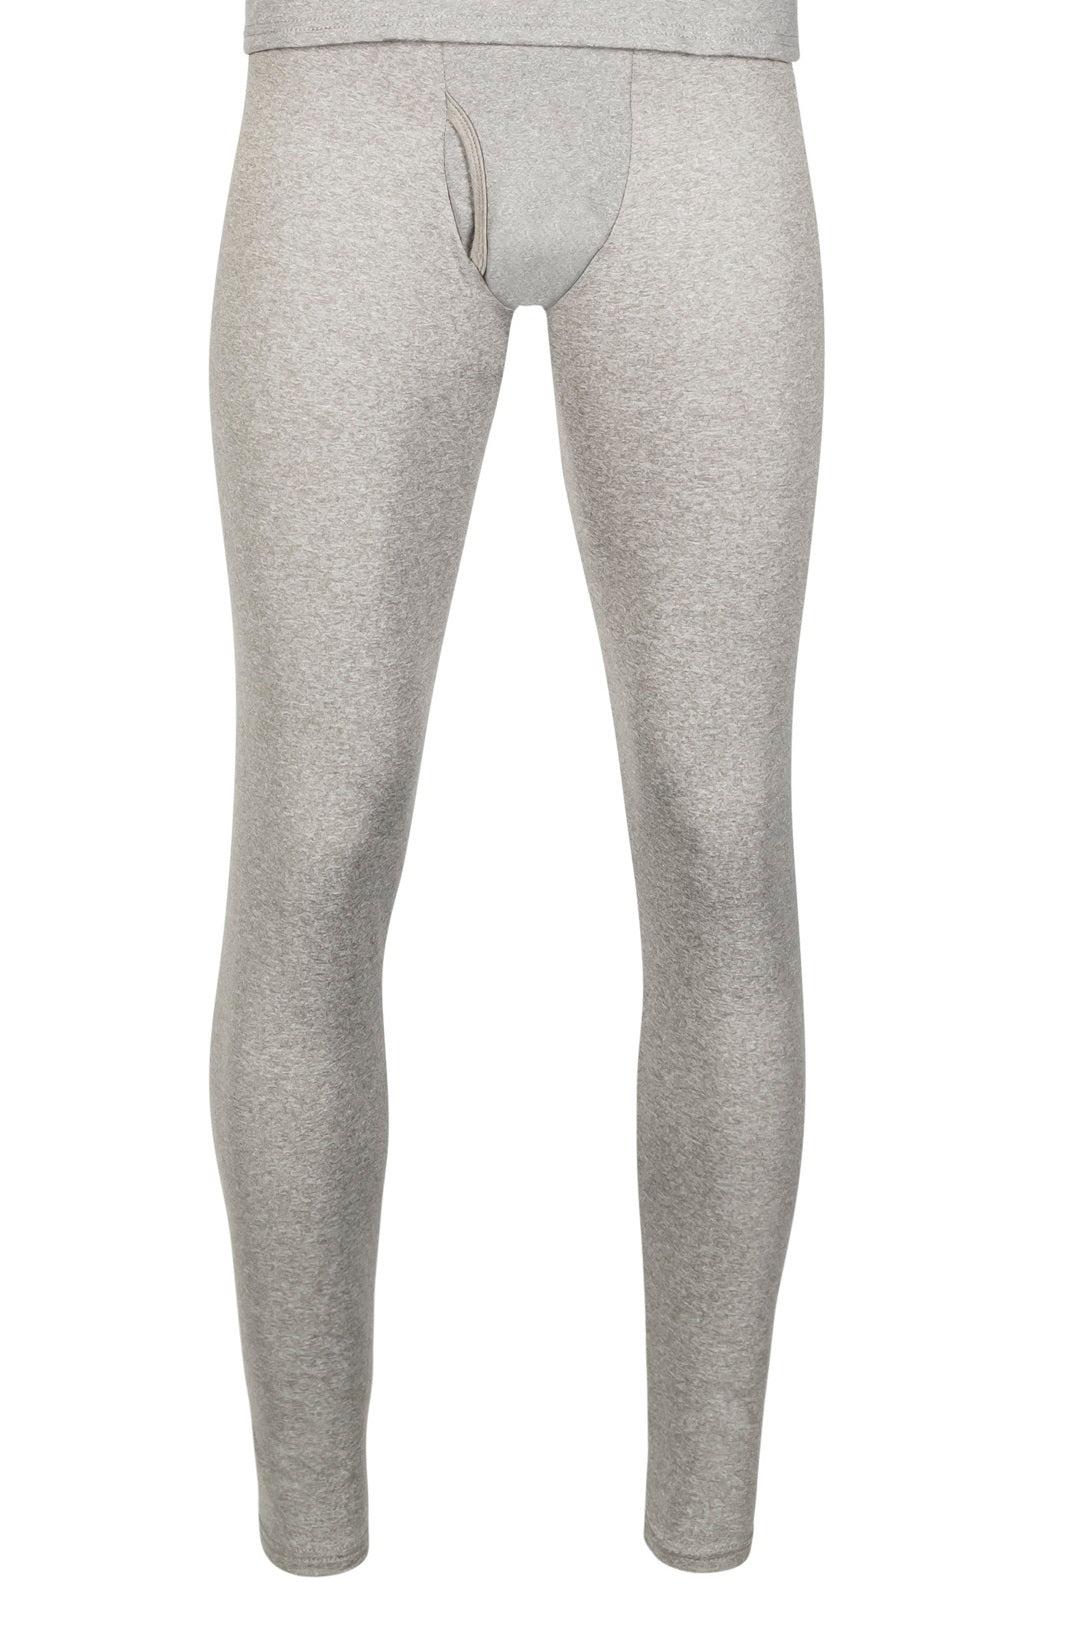 Rocky Women's Thermal Bottoms (Long John Base Layer Underwear Pants)  Insulated for Outdoor Ski Warmth/Extreme Cold Pajamas (Geometric -  X-Small), Geometric Design-standard, XS price in Saudi Arabia,   Saudi Arabia